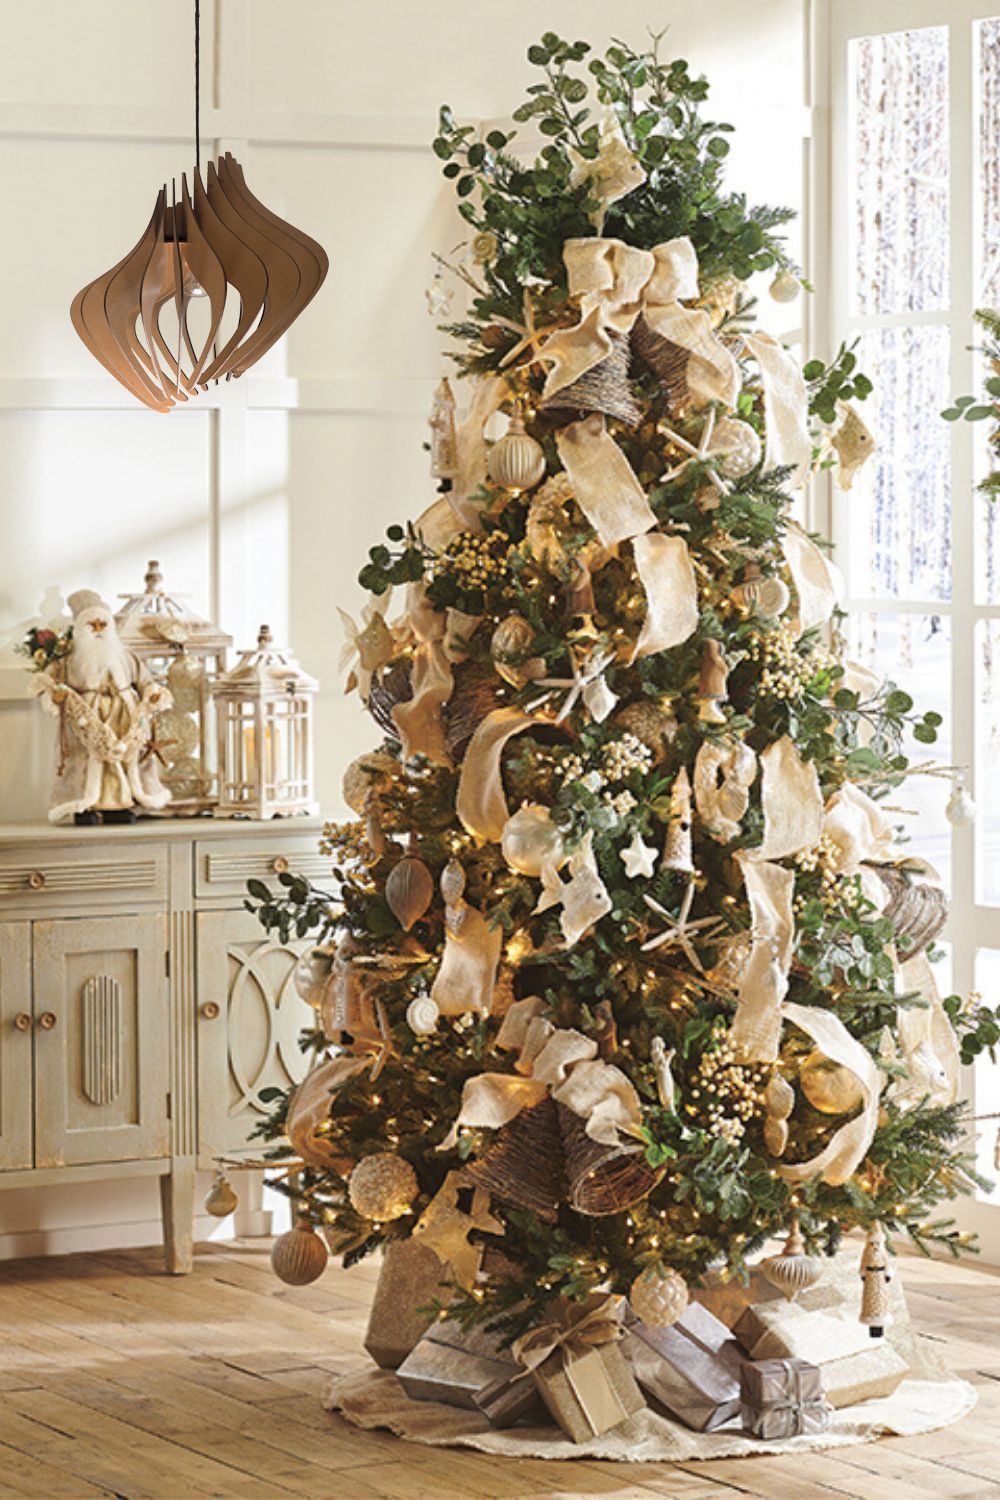 Christmas Decoration Chandelier, Wood Pendant Lighting Fixture, Contemporary Seasonal Light Design -   19 christmas tree themes 2020 ideas